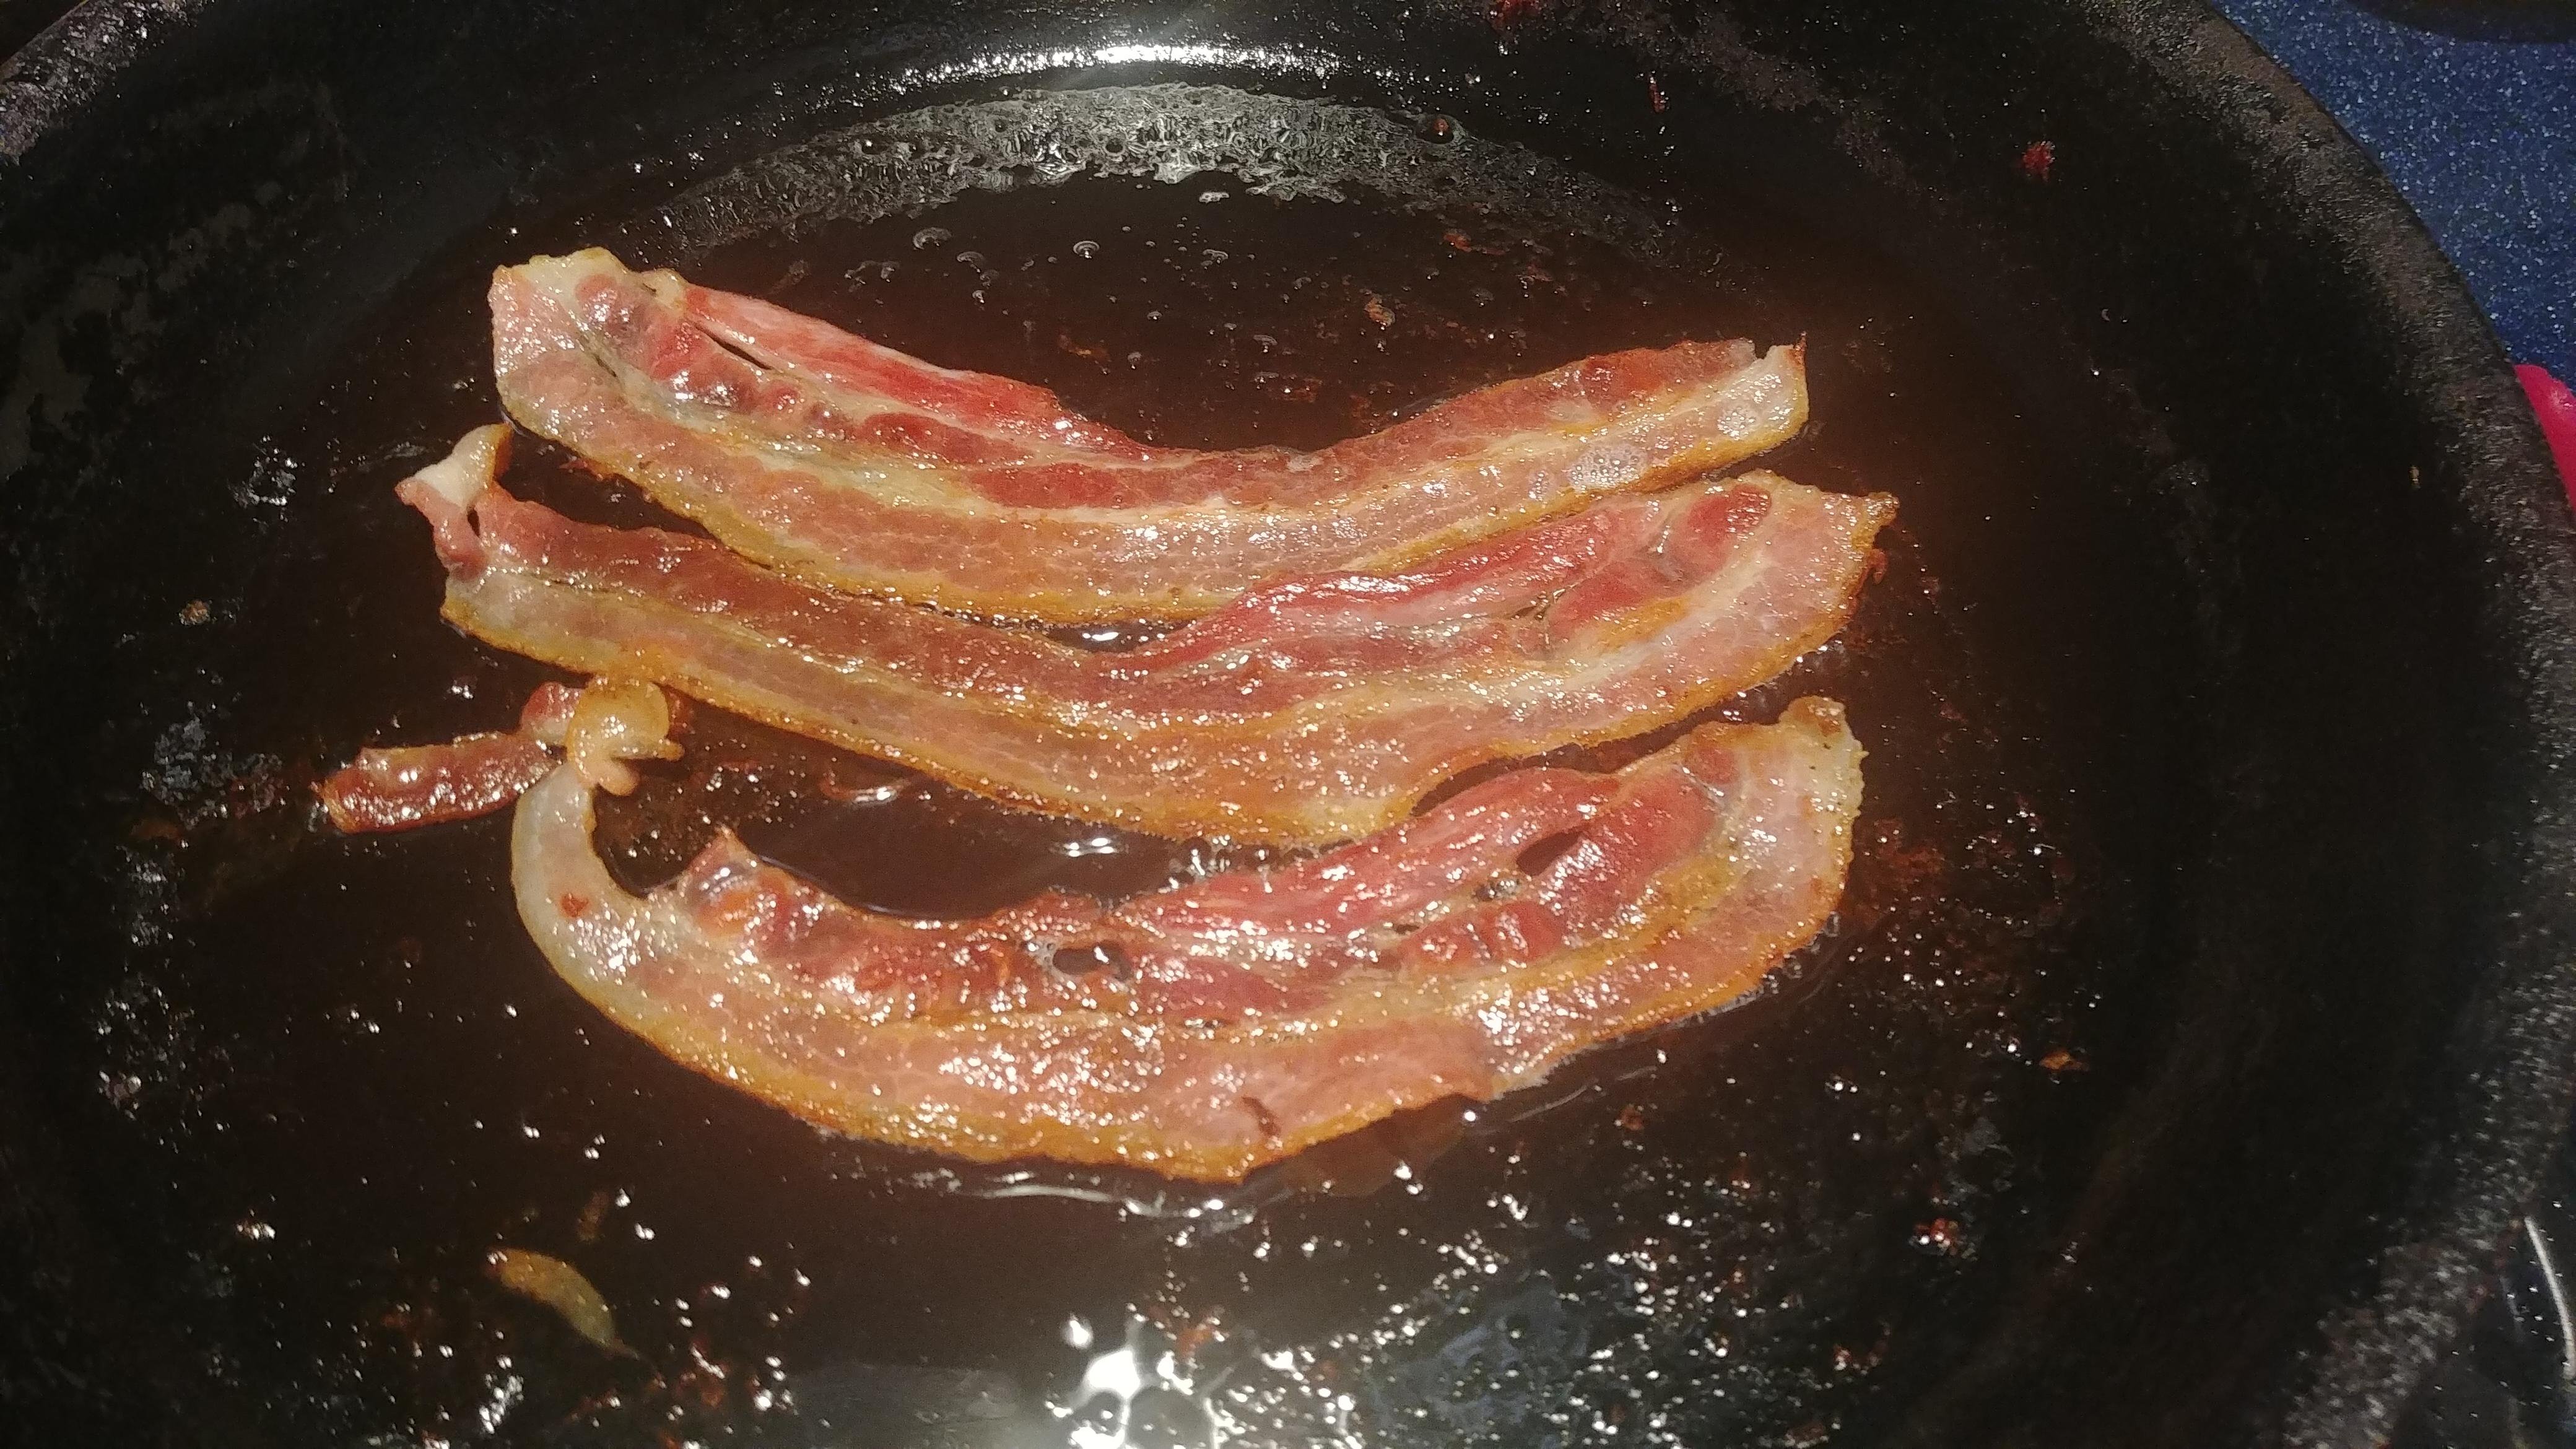 Bacon.jpg